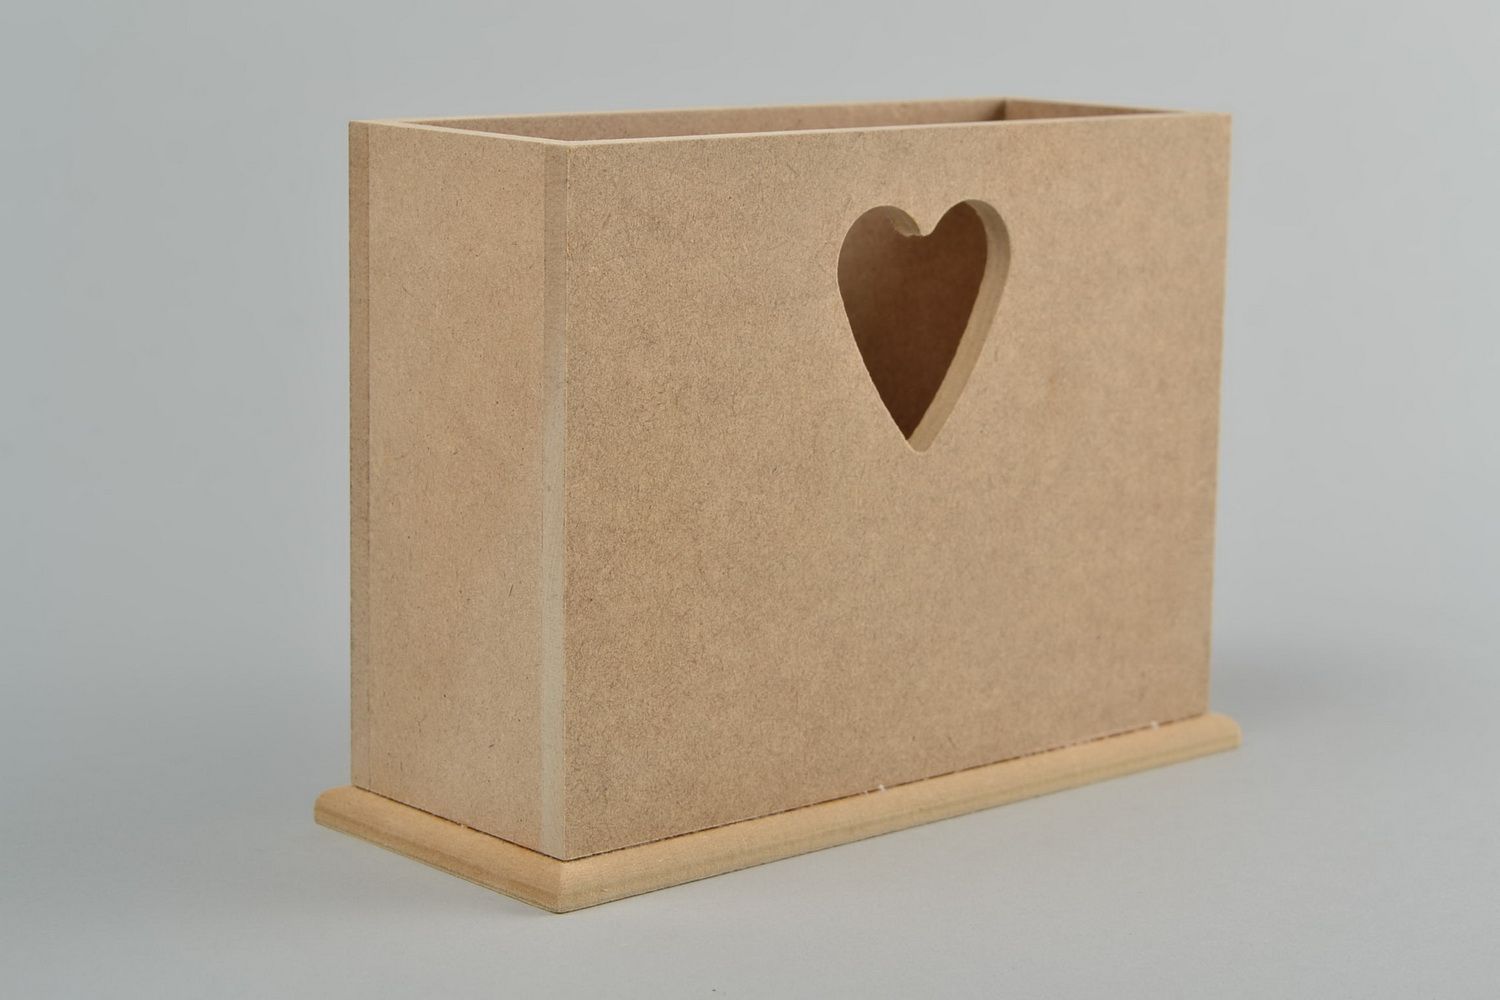 ARTIBETTER Caja de pañuelos de bricolaje hecha a mano, caja de papel de  servilleta artesanal sin pintar, contenedor de madera sin pintar, juguete